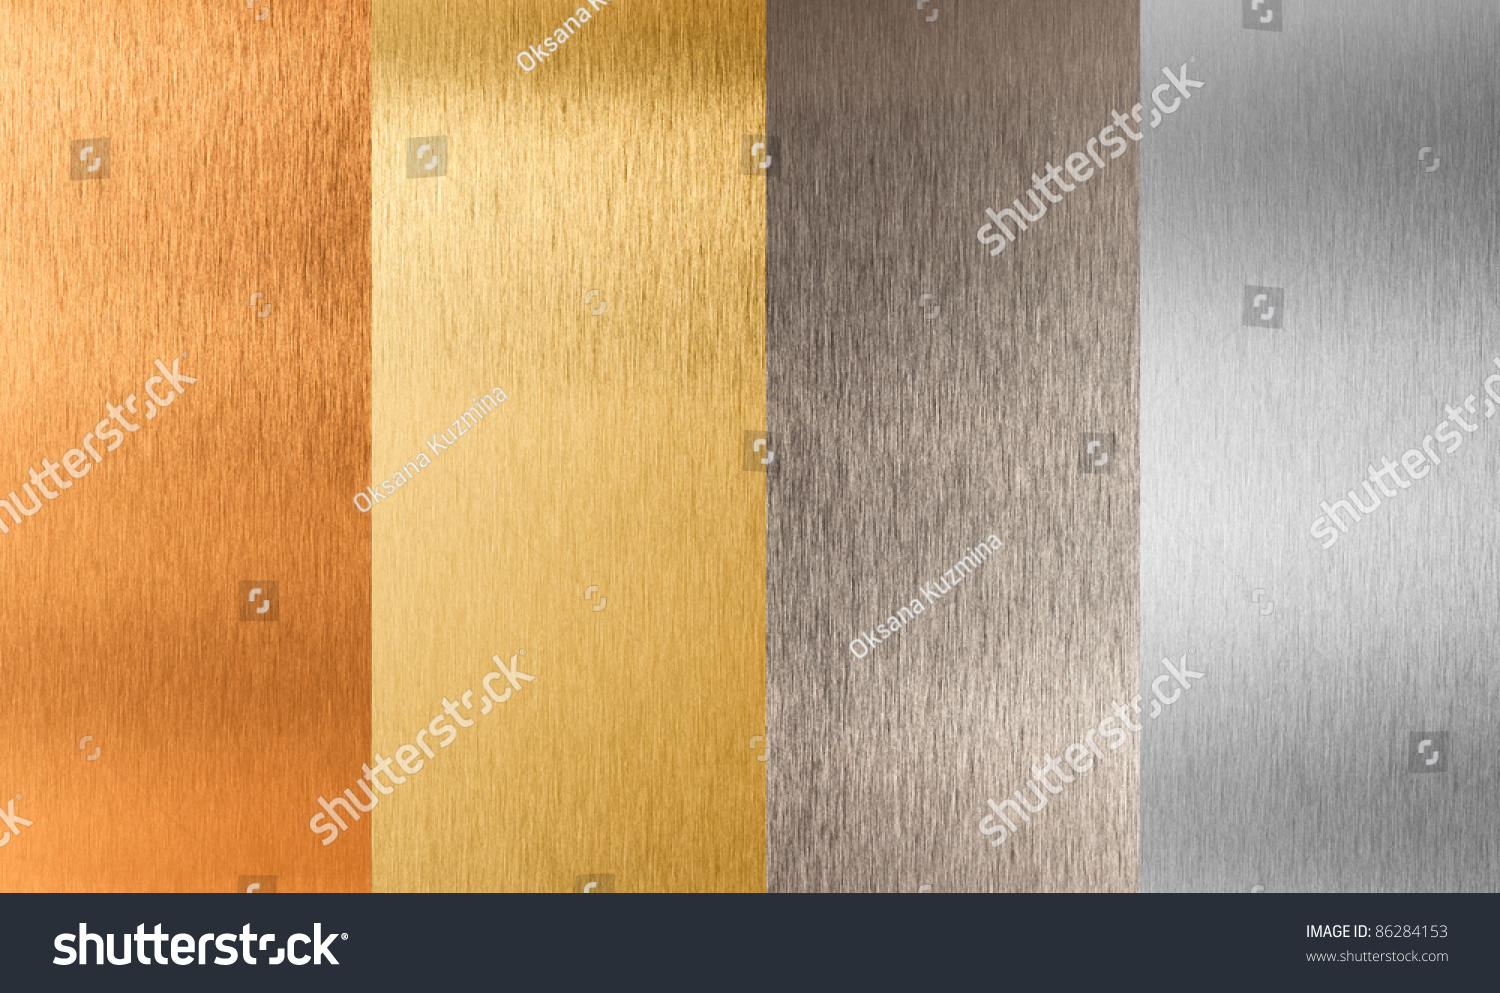 Gold Silver Bronze Nonferrous Metal Set Stock Photo 86284153 - Shutterstock